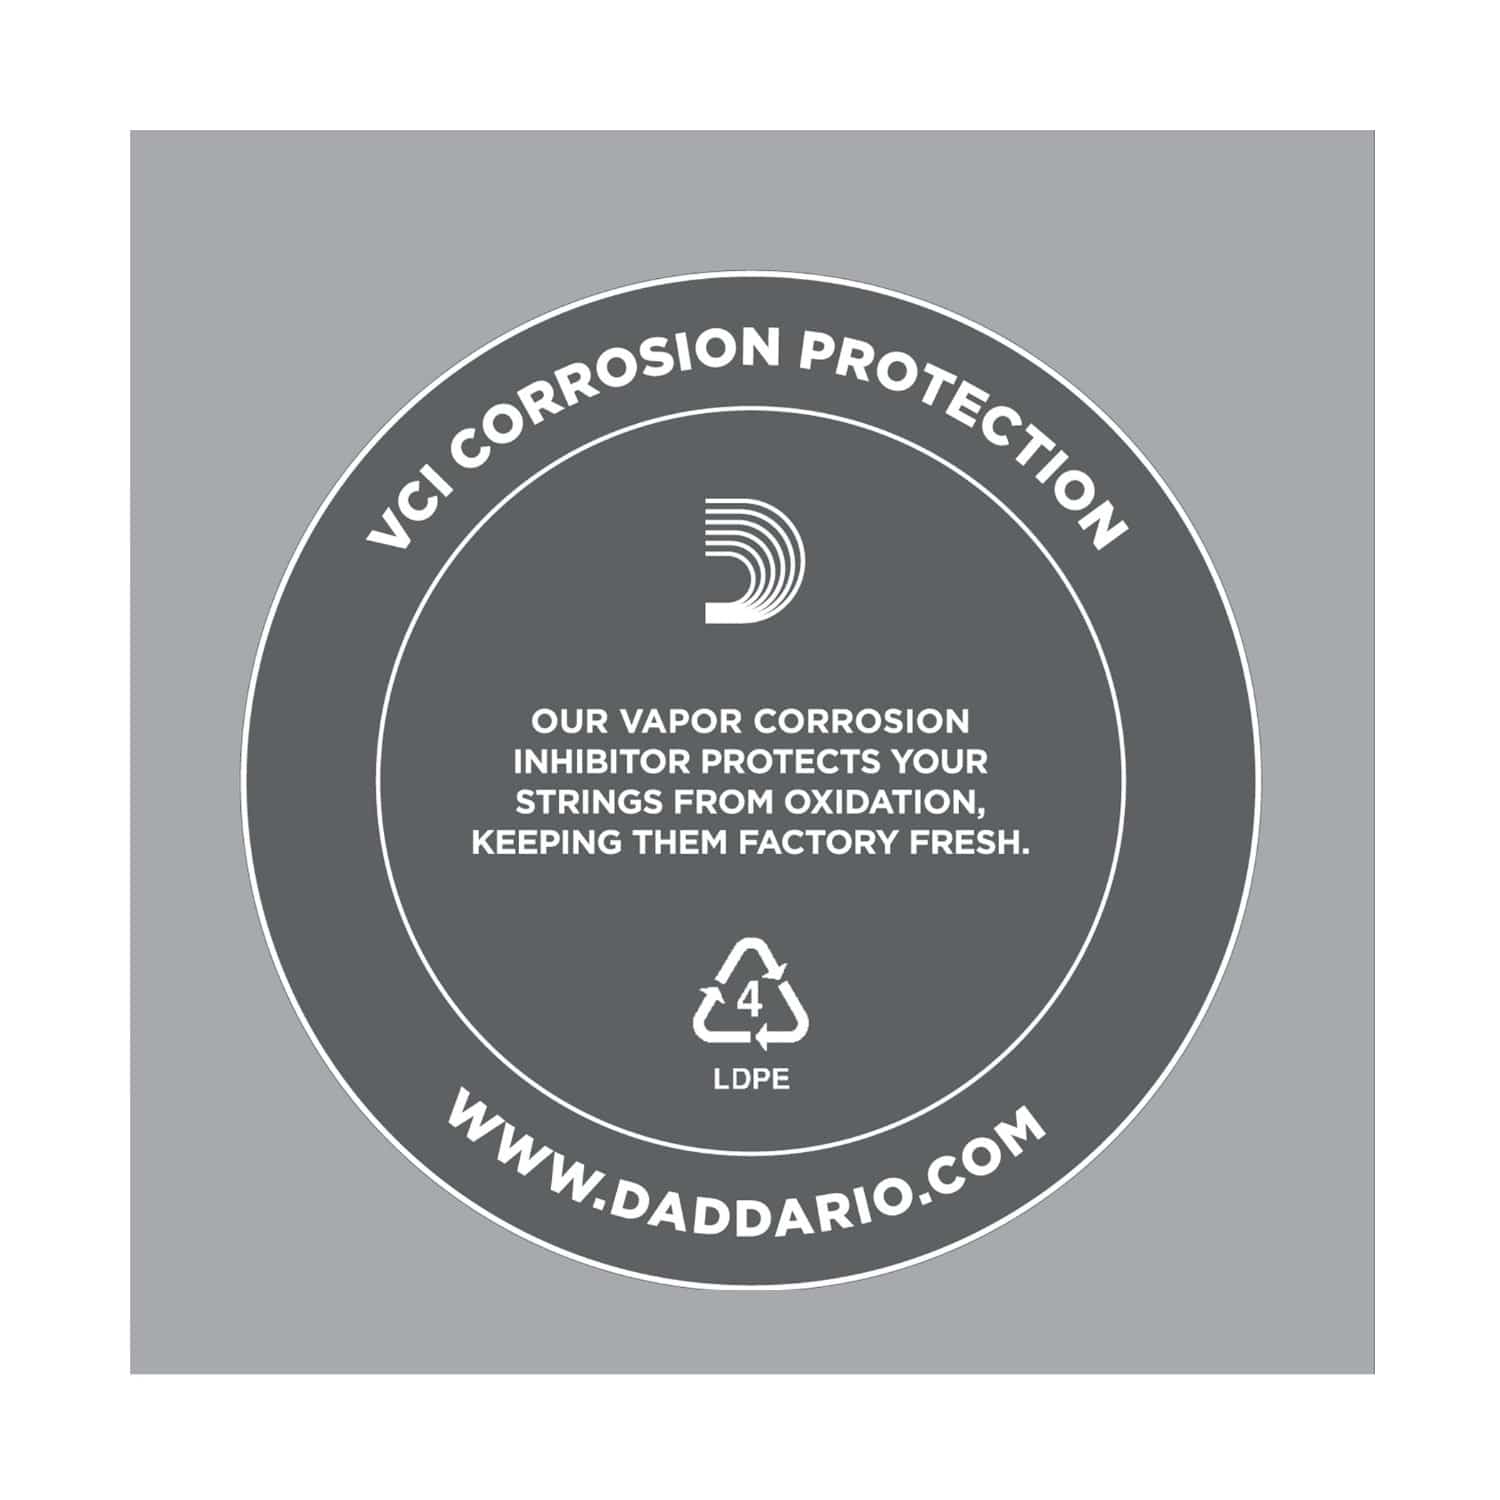 D’Addario PL019 Plain Steel Single String – Acoustic & Electric Guitar